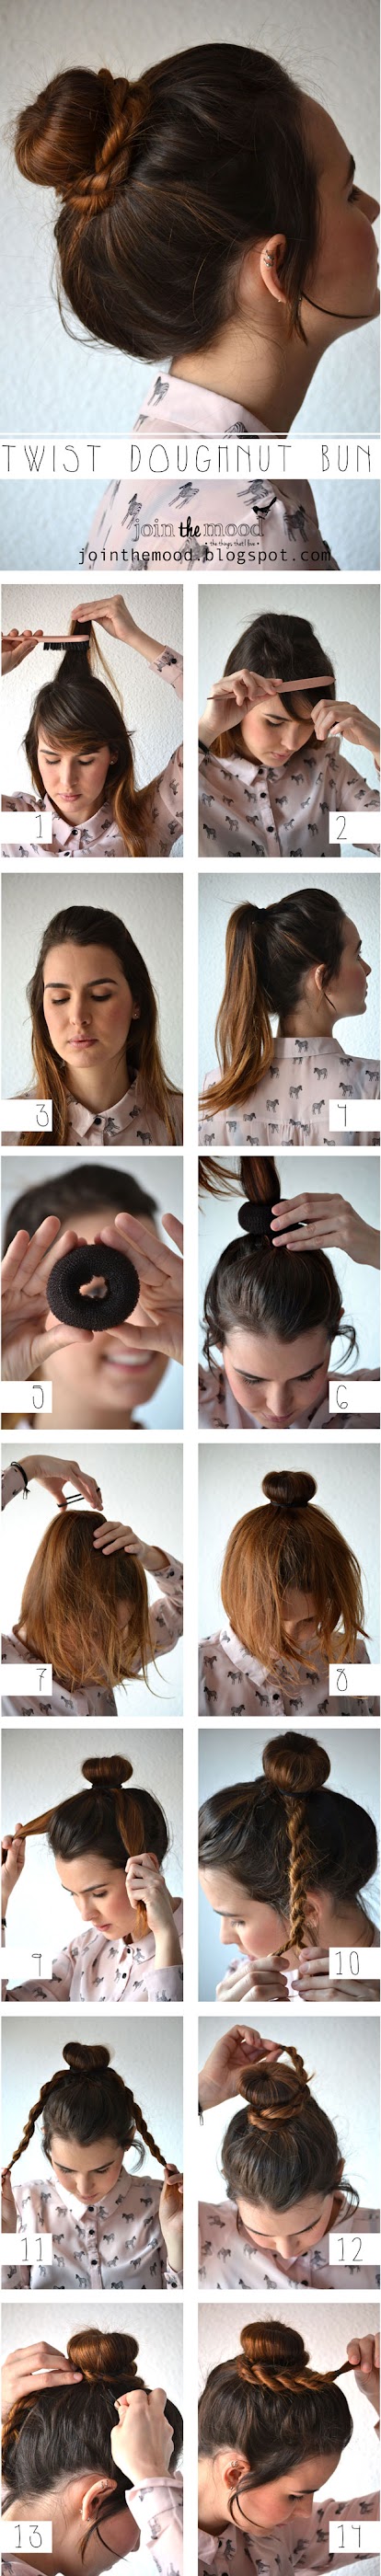 How To Make Twist Doughnut Bun For Your Hair